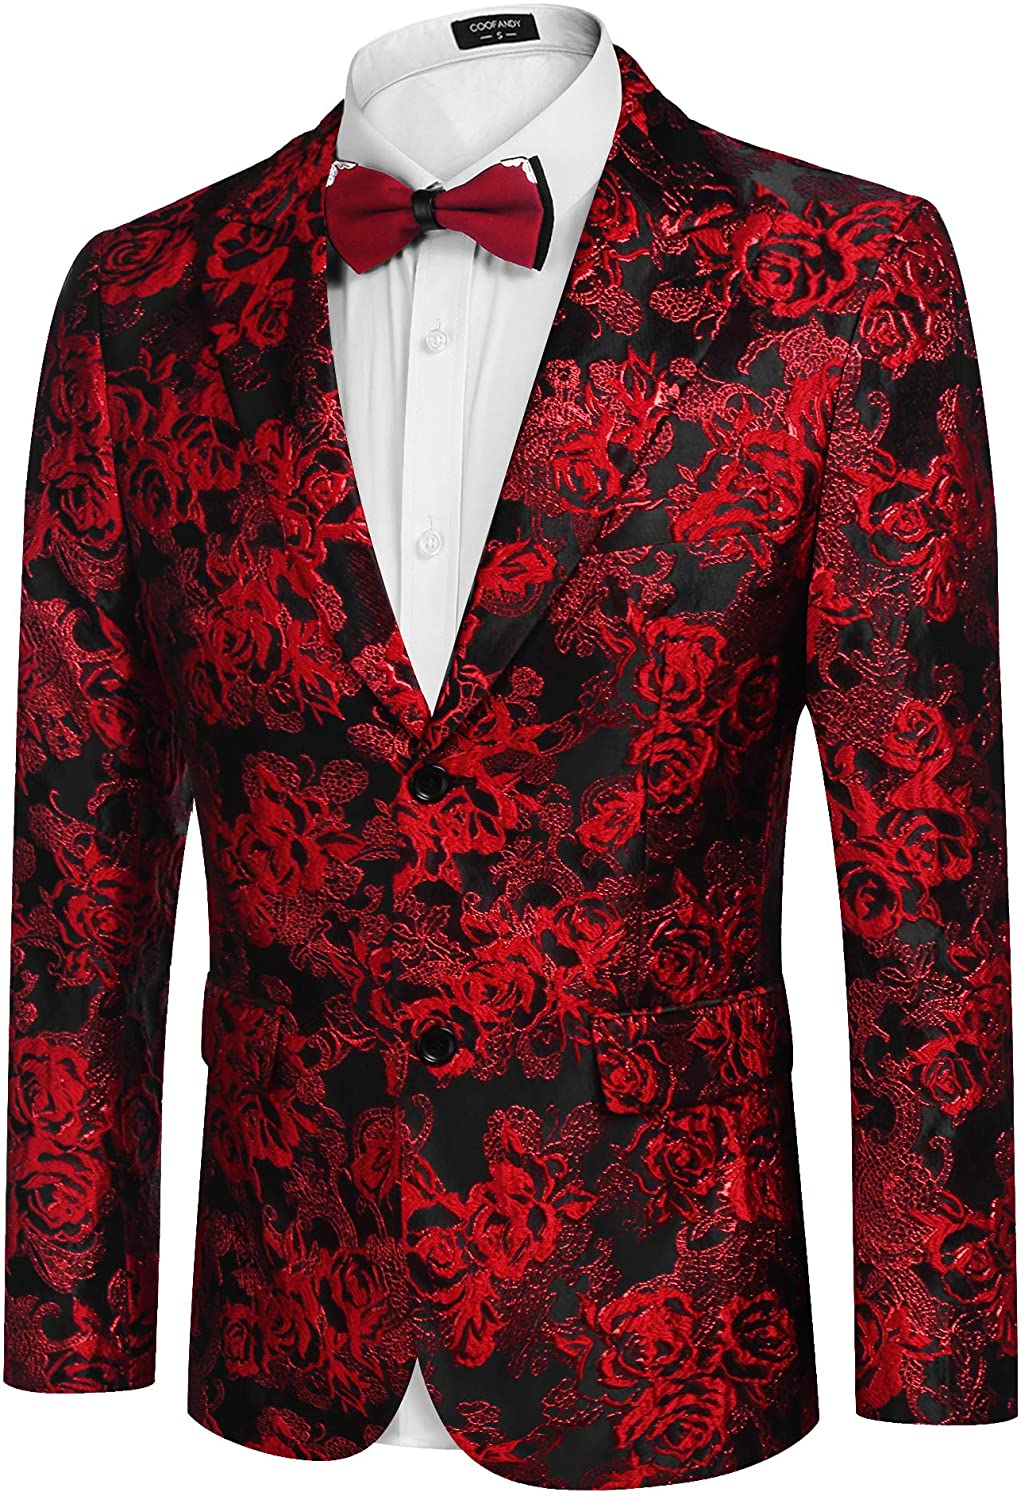 COOFANDY Men's Floral Tuxedo Jacket Rose Embroidered Suit Jacket ...